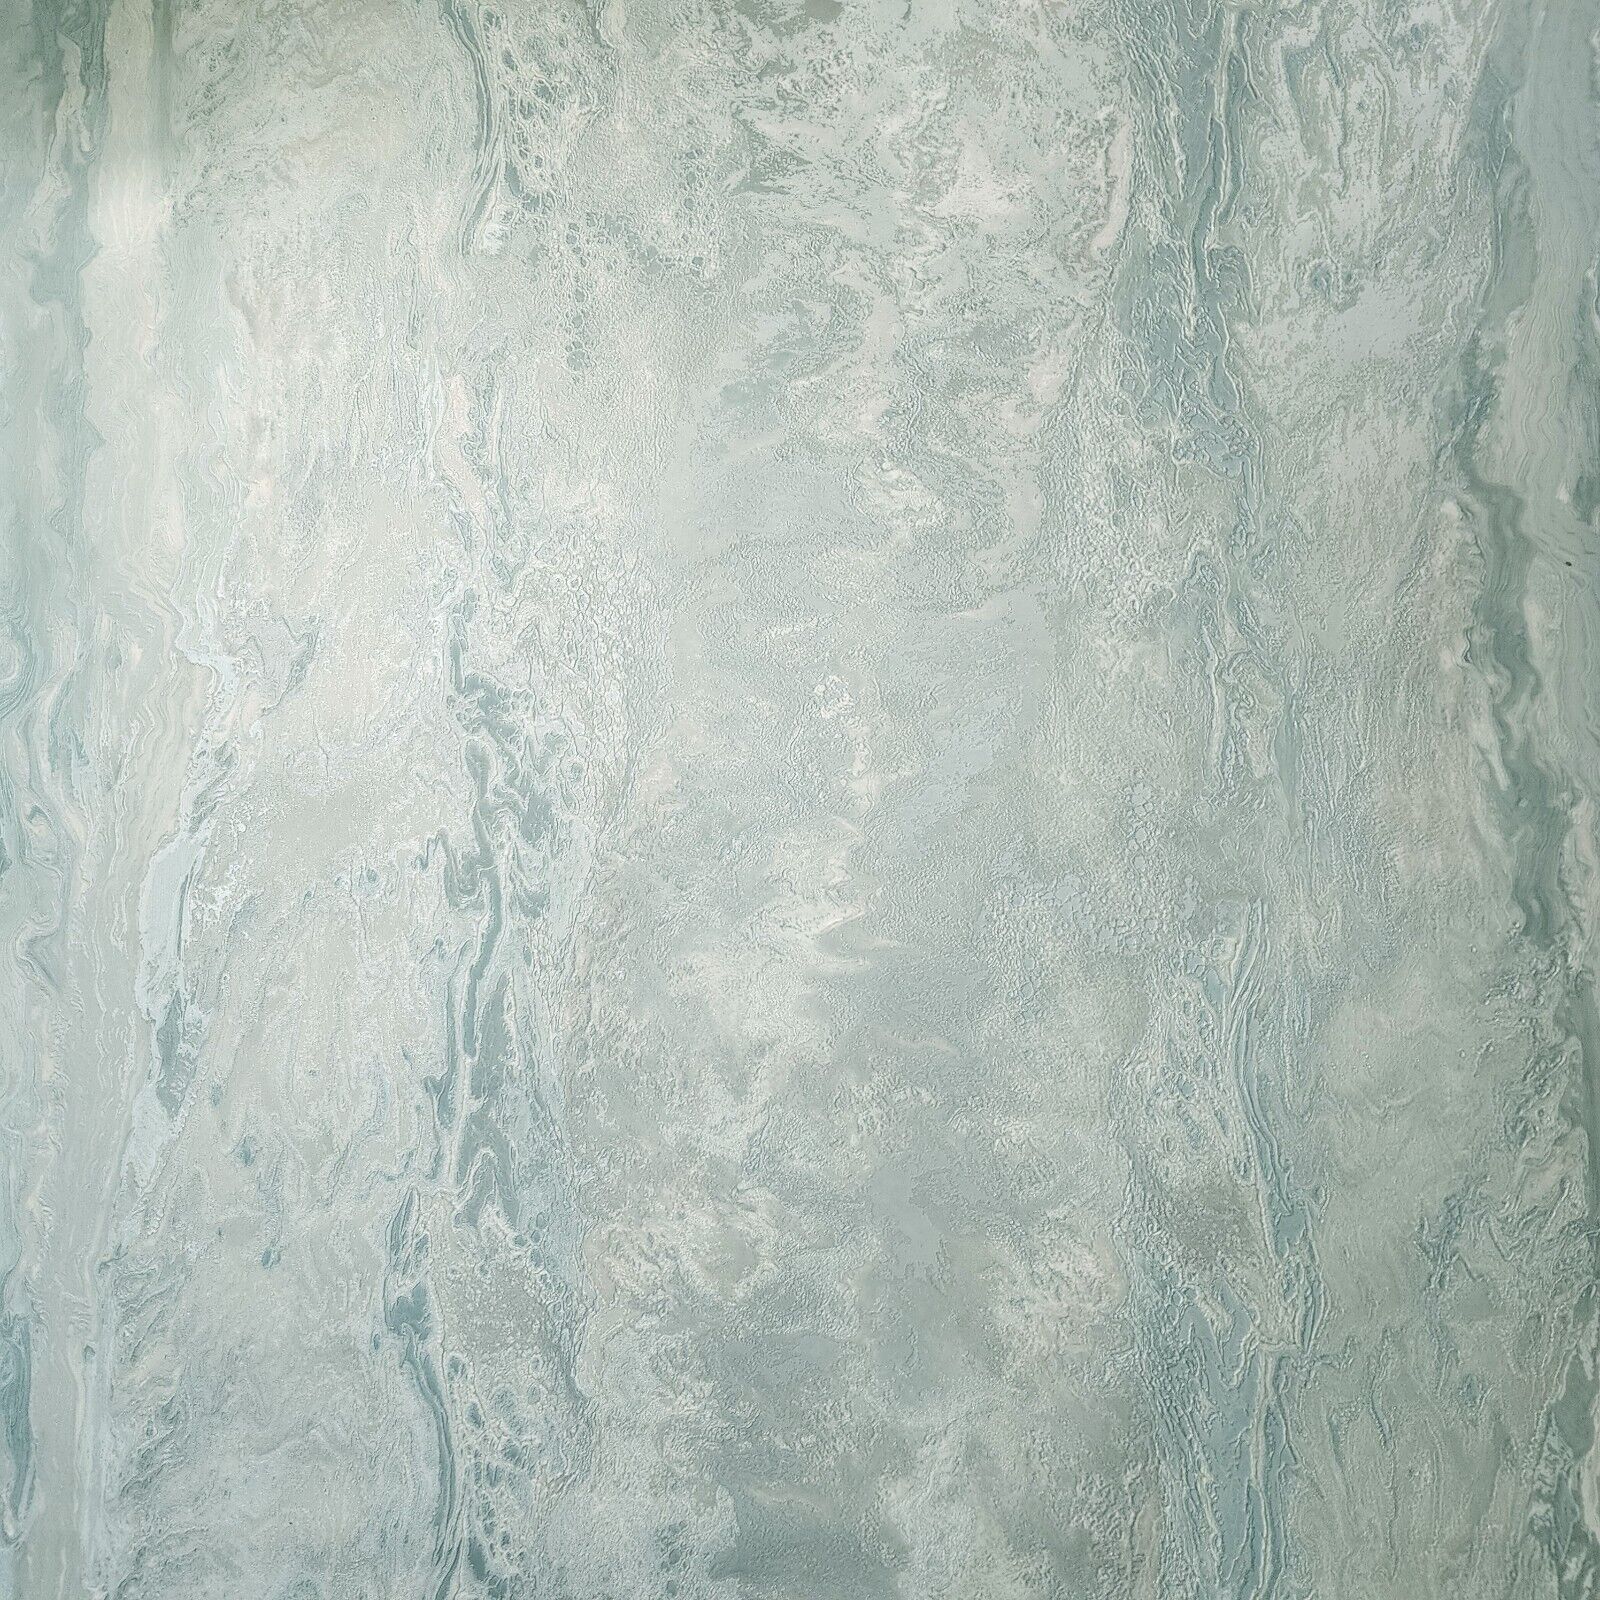 Z46008 Blue gray Tan Striped faux onyx marble stone textured 